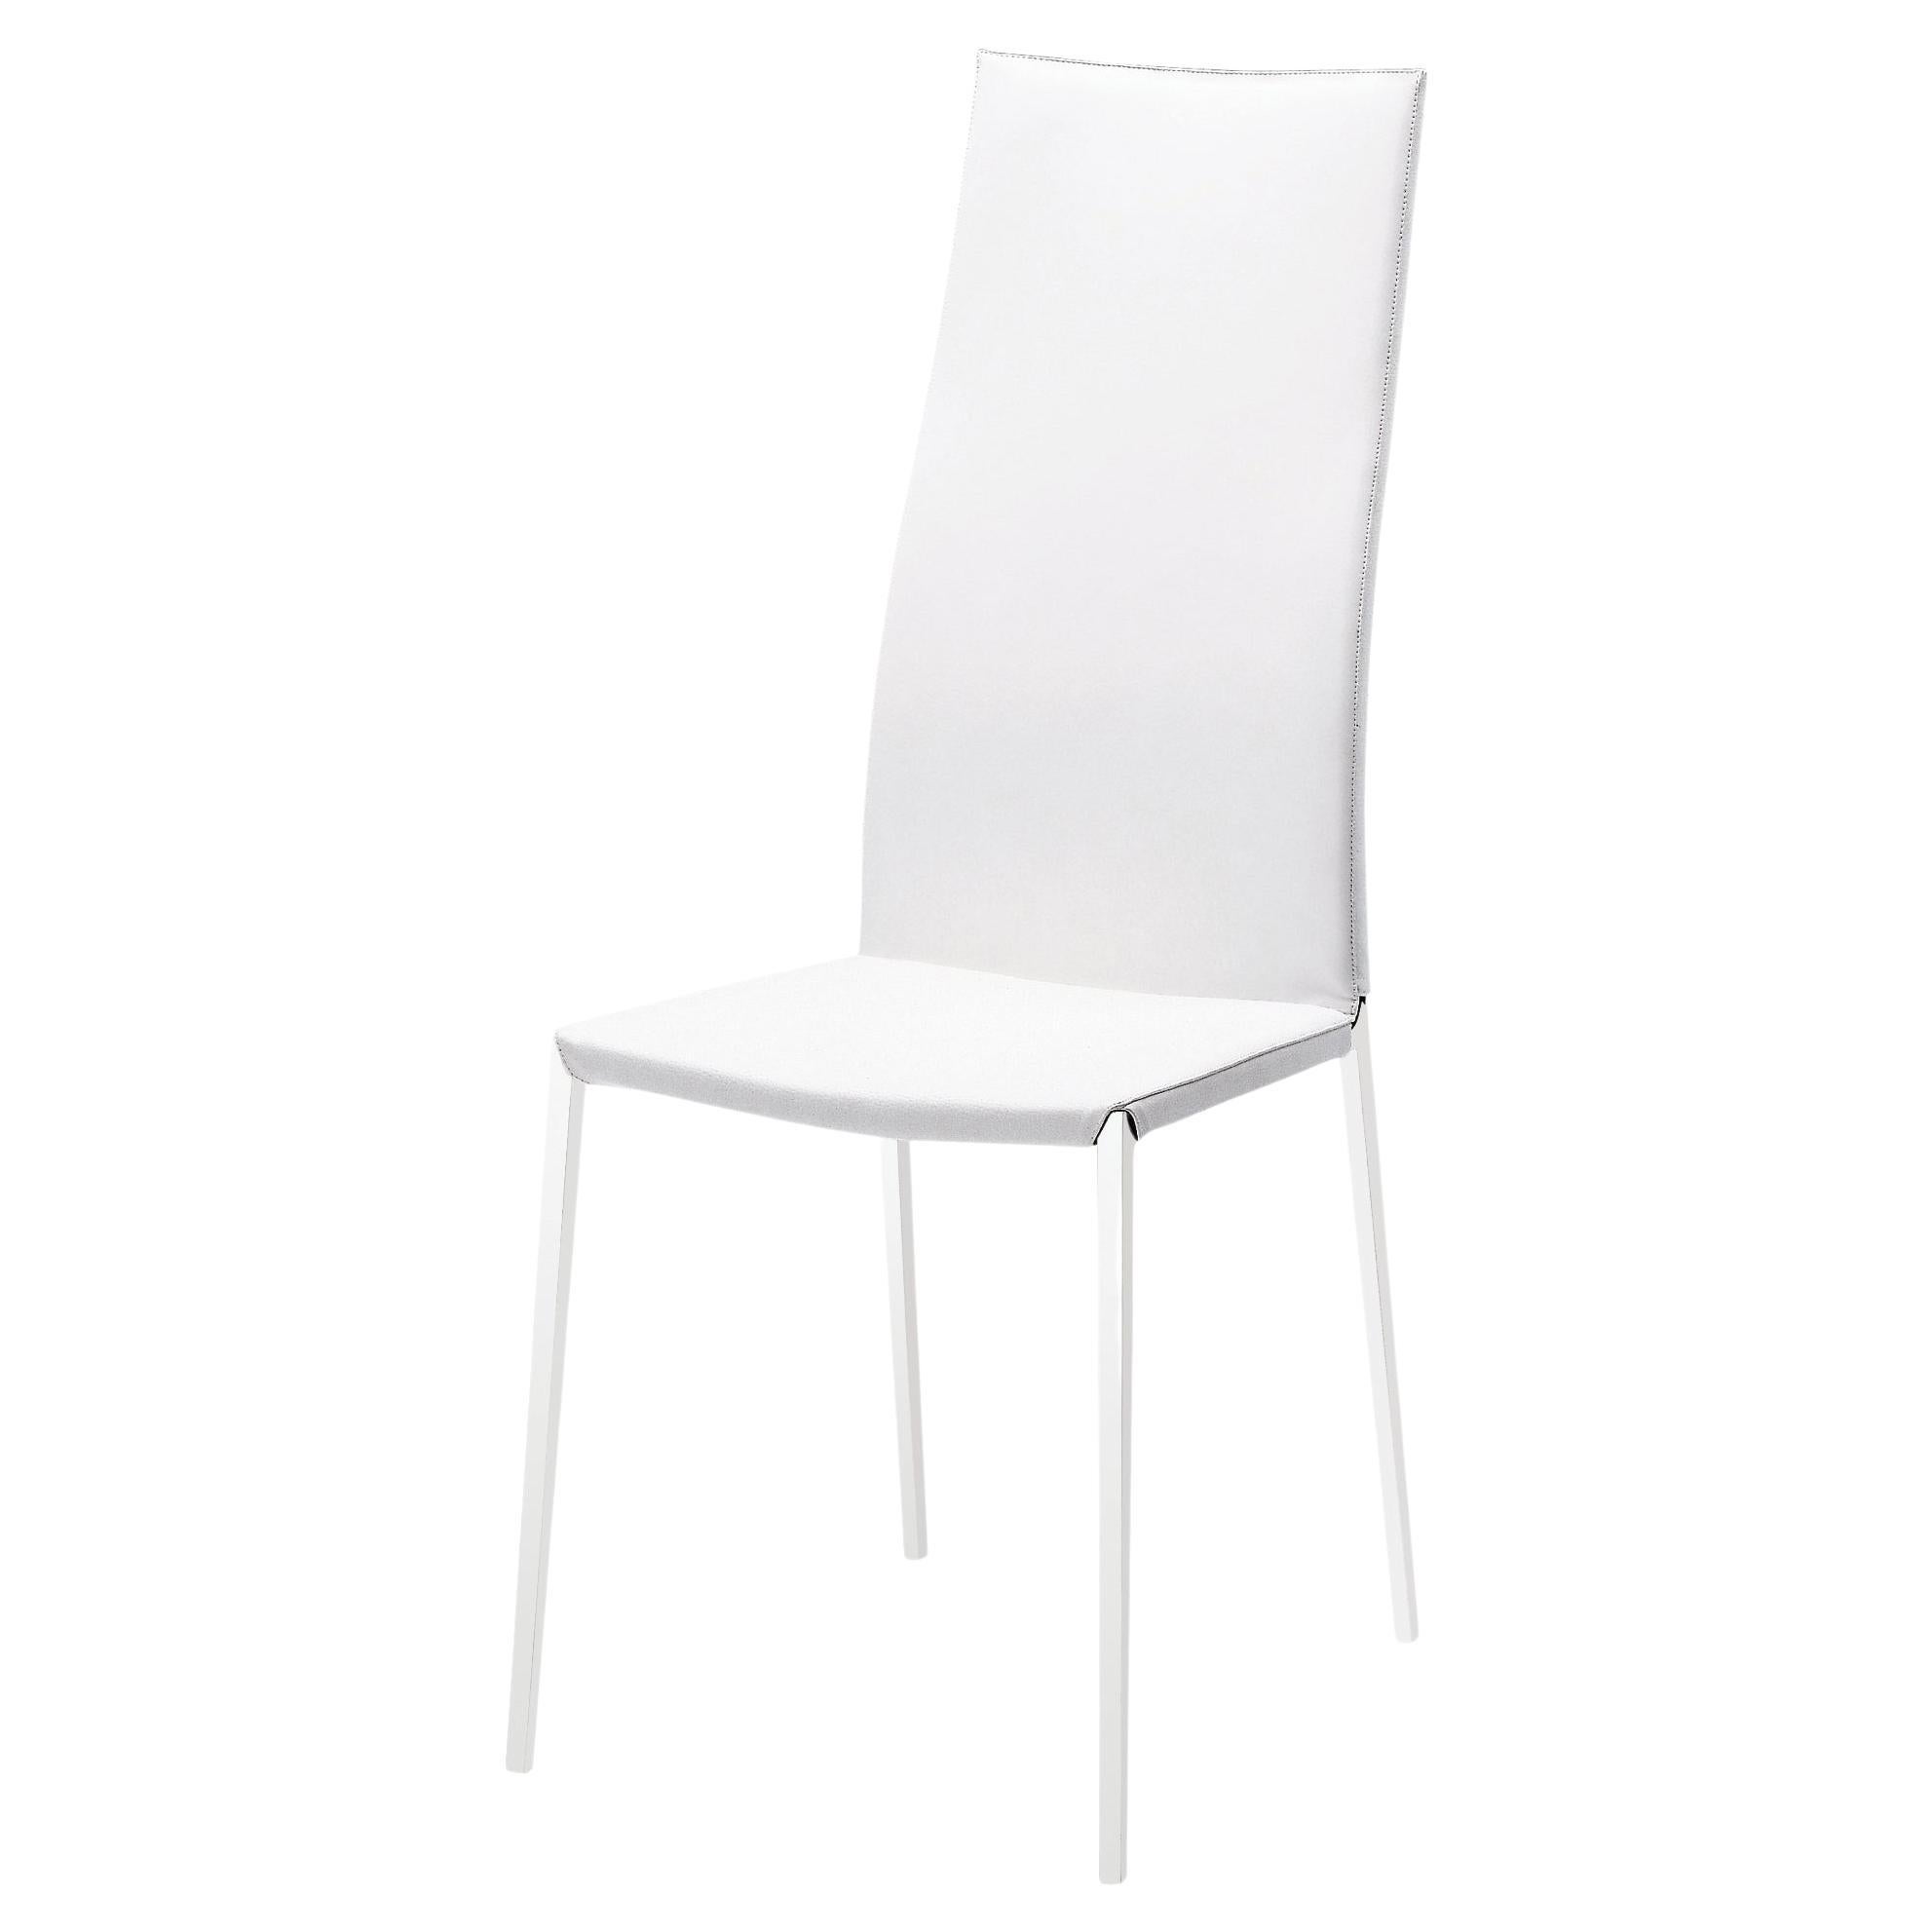 Zanotta Lialta Chair in White Upholstery with White Aluminum Frame For Sale